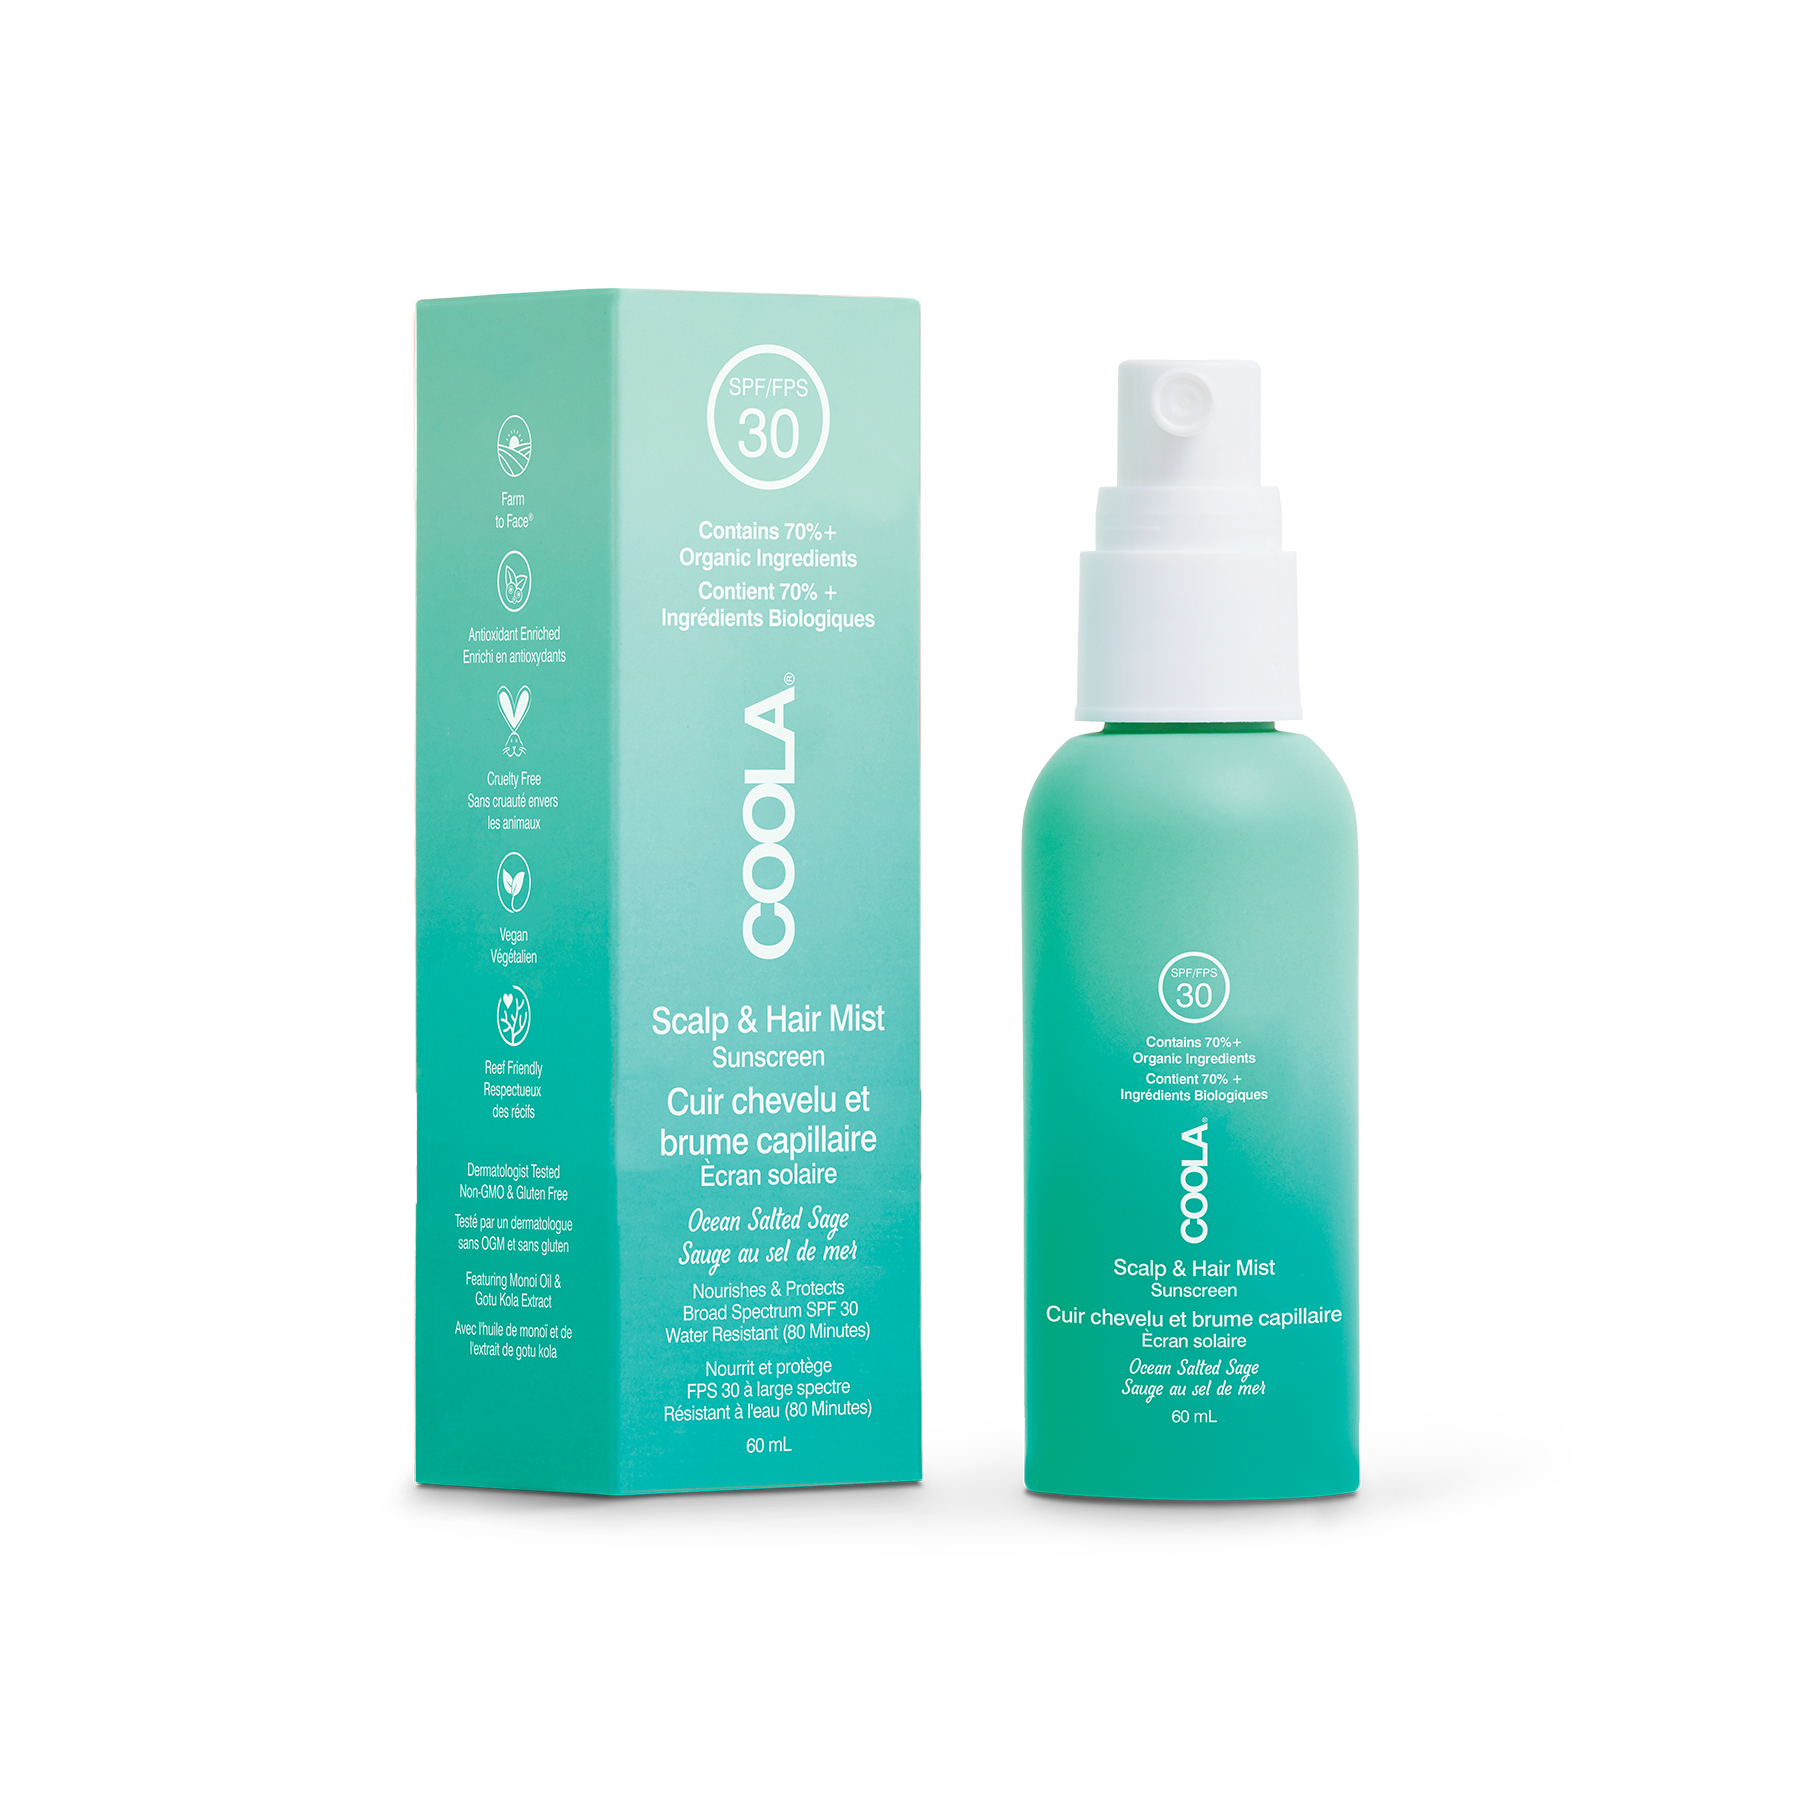 Coola - Skalp & Hair Mist Sunscreen SPF 30